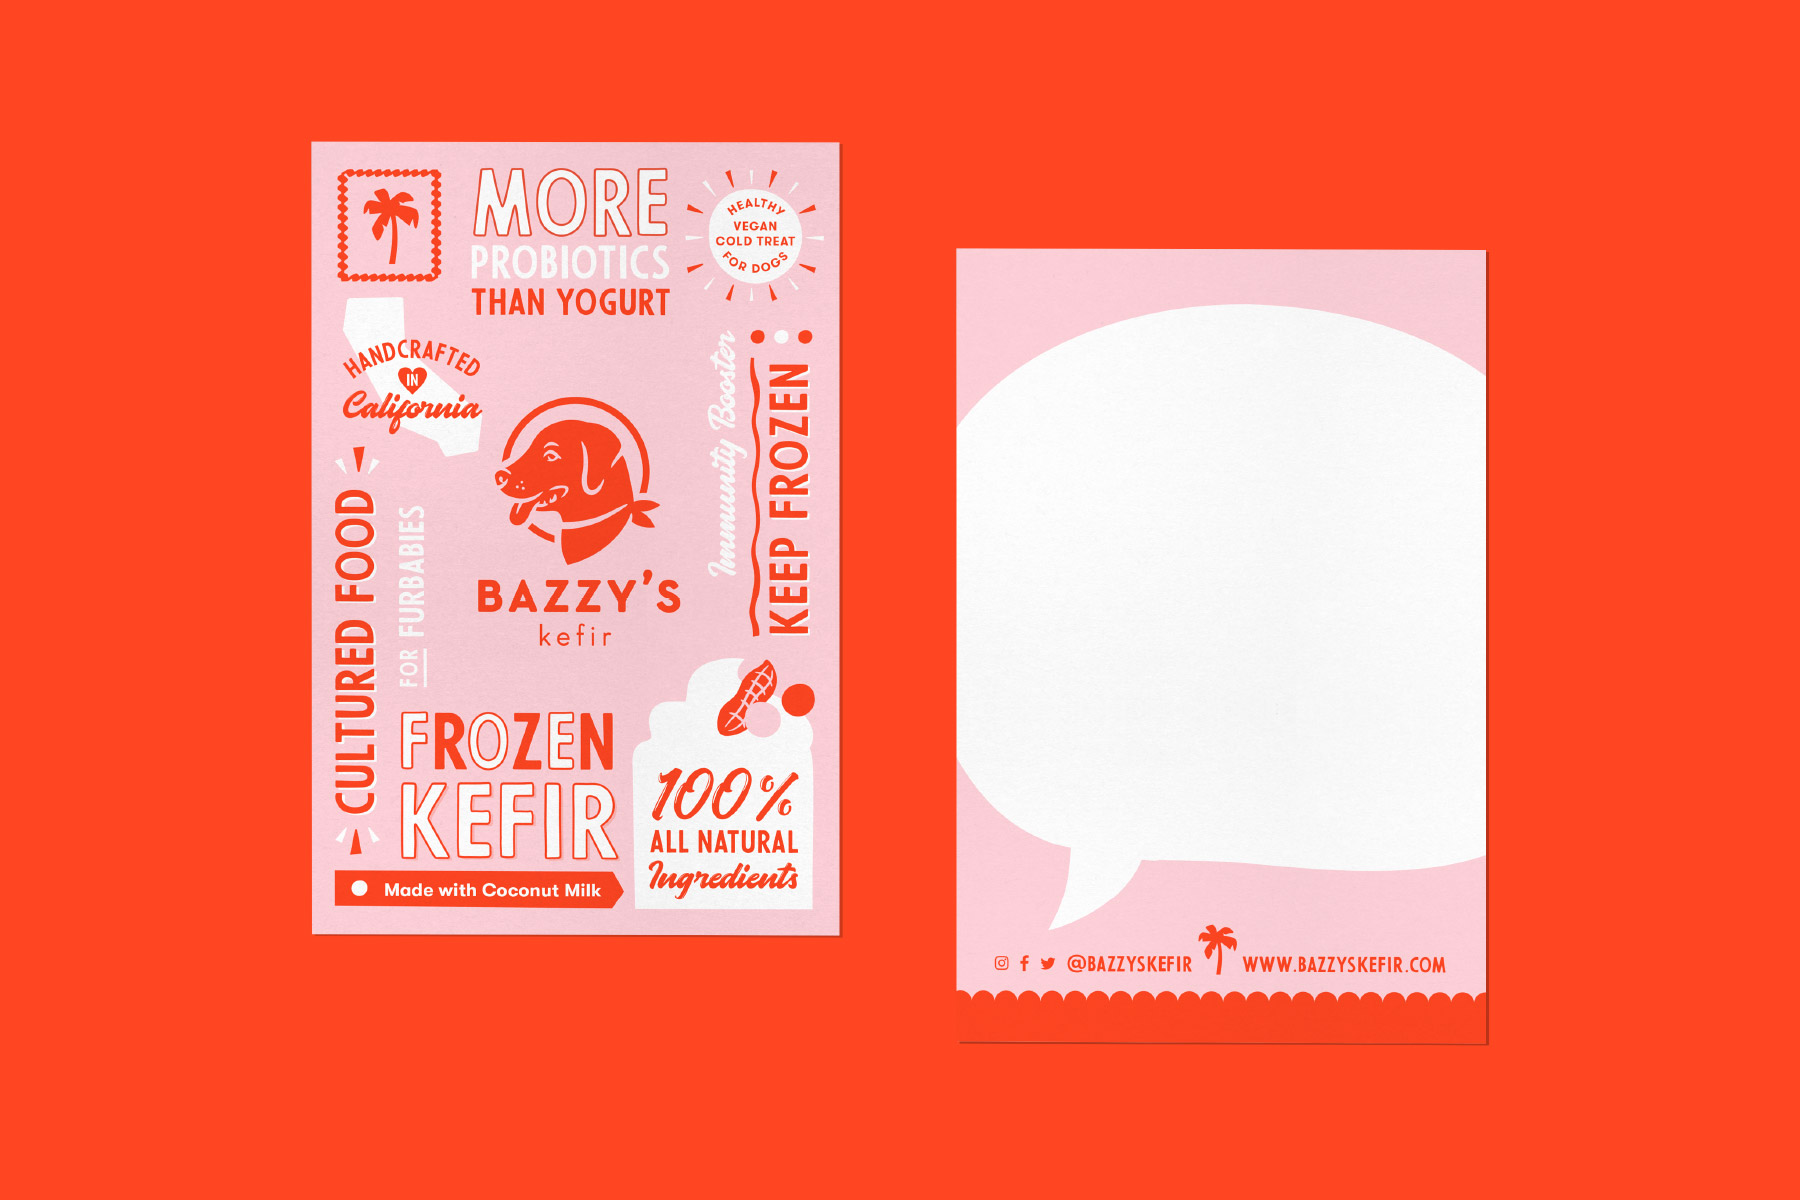 Memo card using a variety of fun fonts